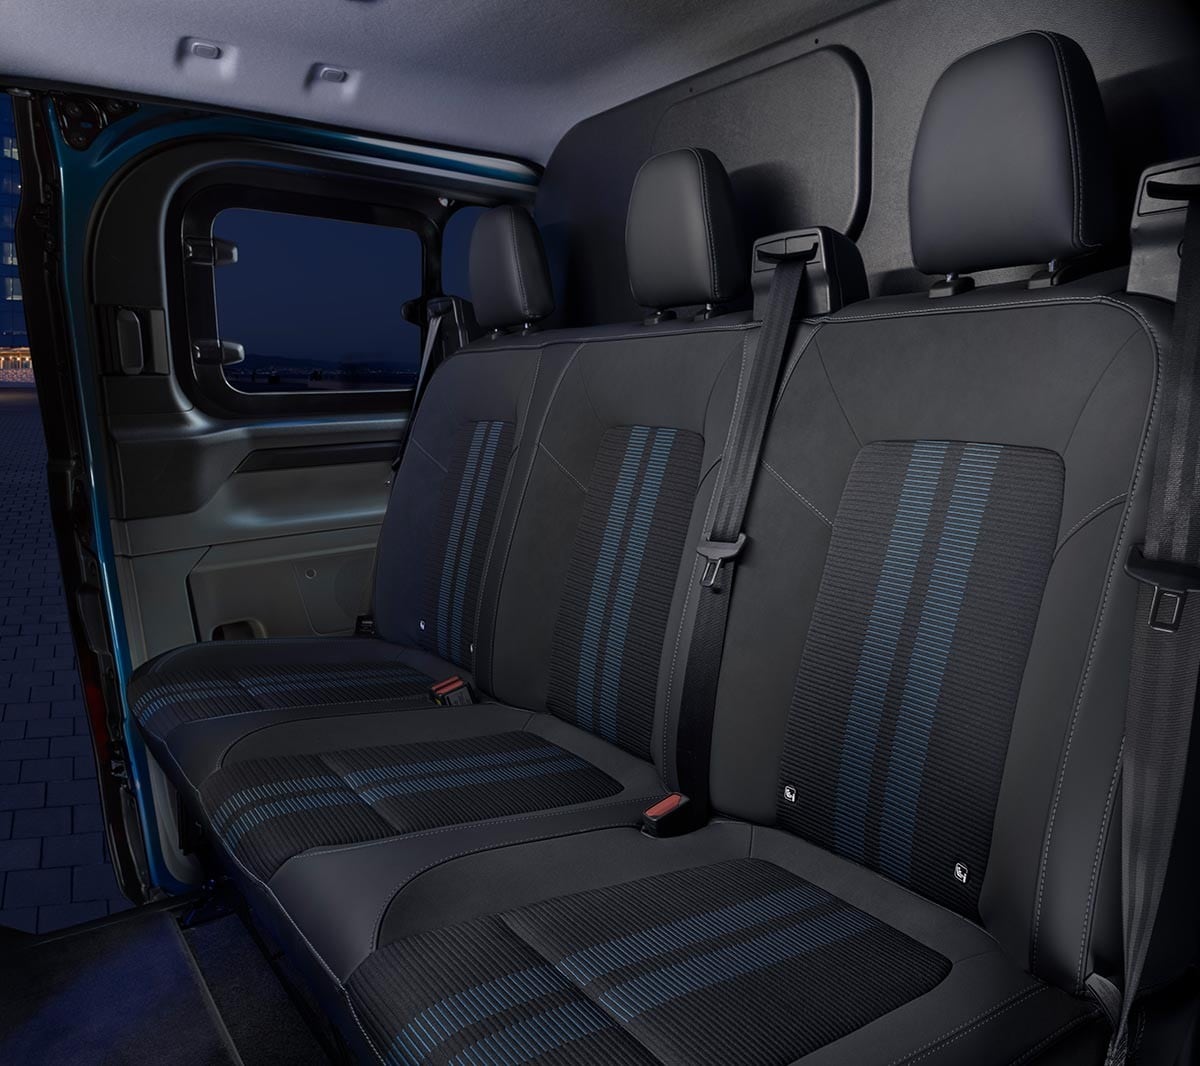 Ford Transit Cusom Sport interior seating